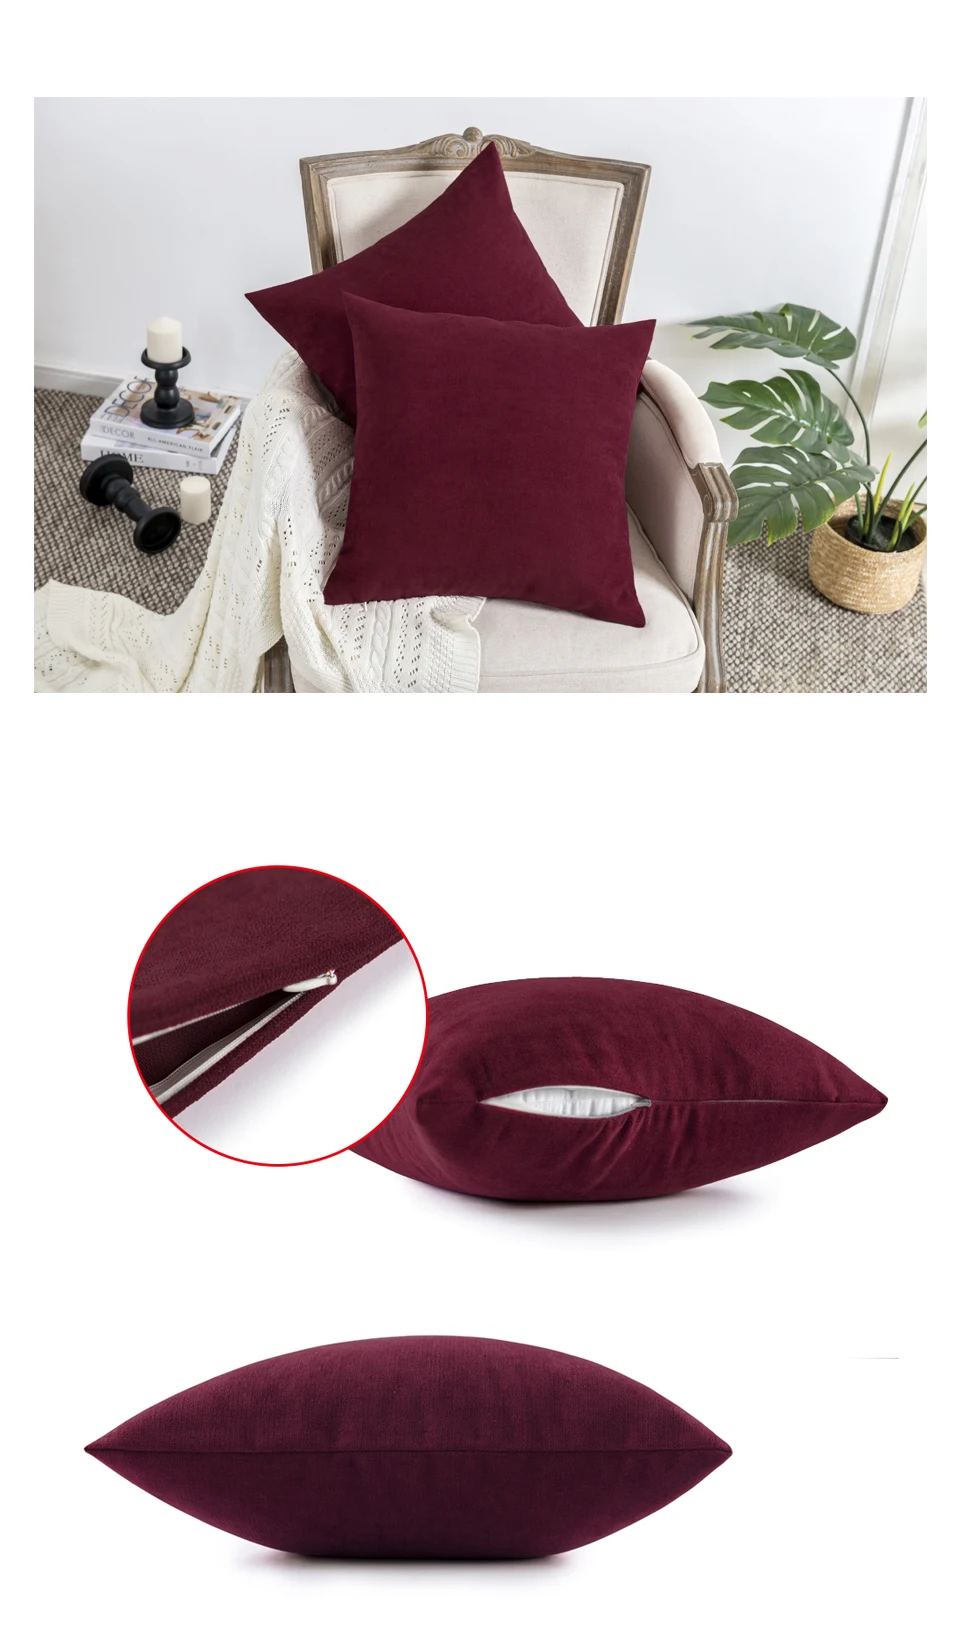 GIGIZAZA фиолетовые наволочки 45x45 50x50 для дивана домашний декор для кровати подушки Чехлы для дивана спальни роскошные наволочки